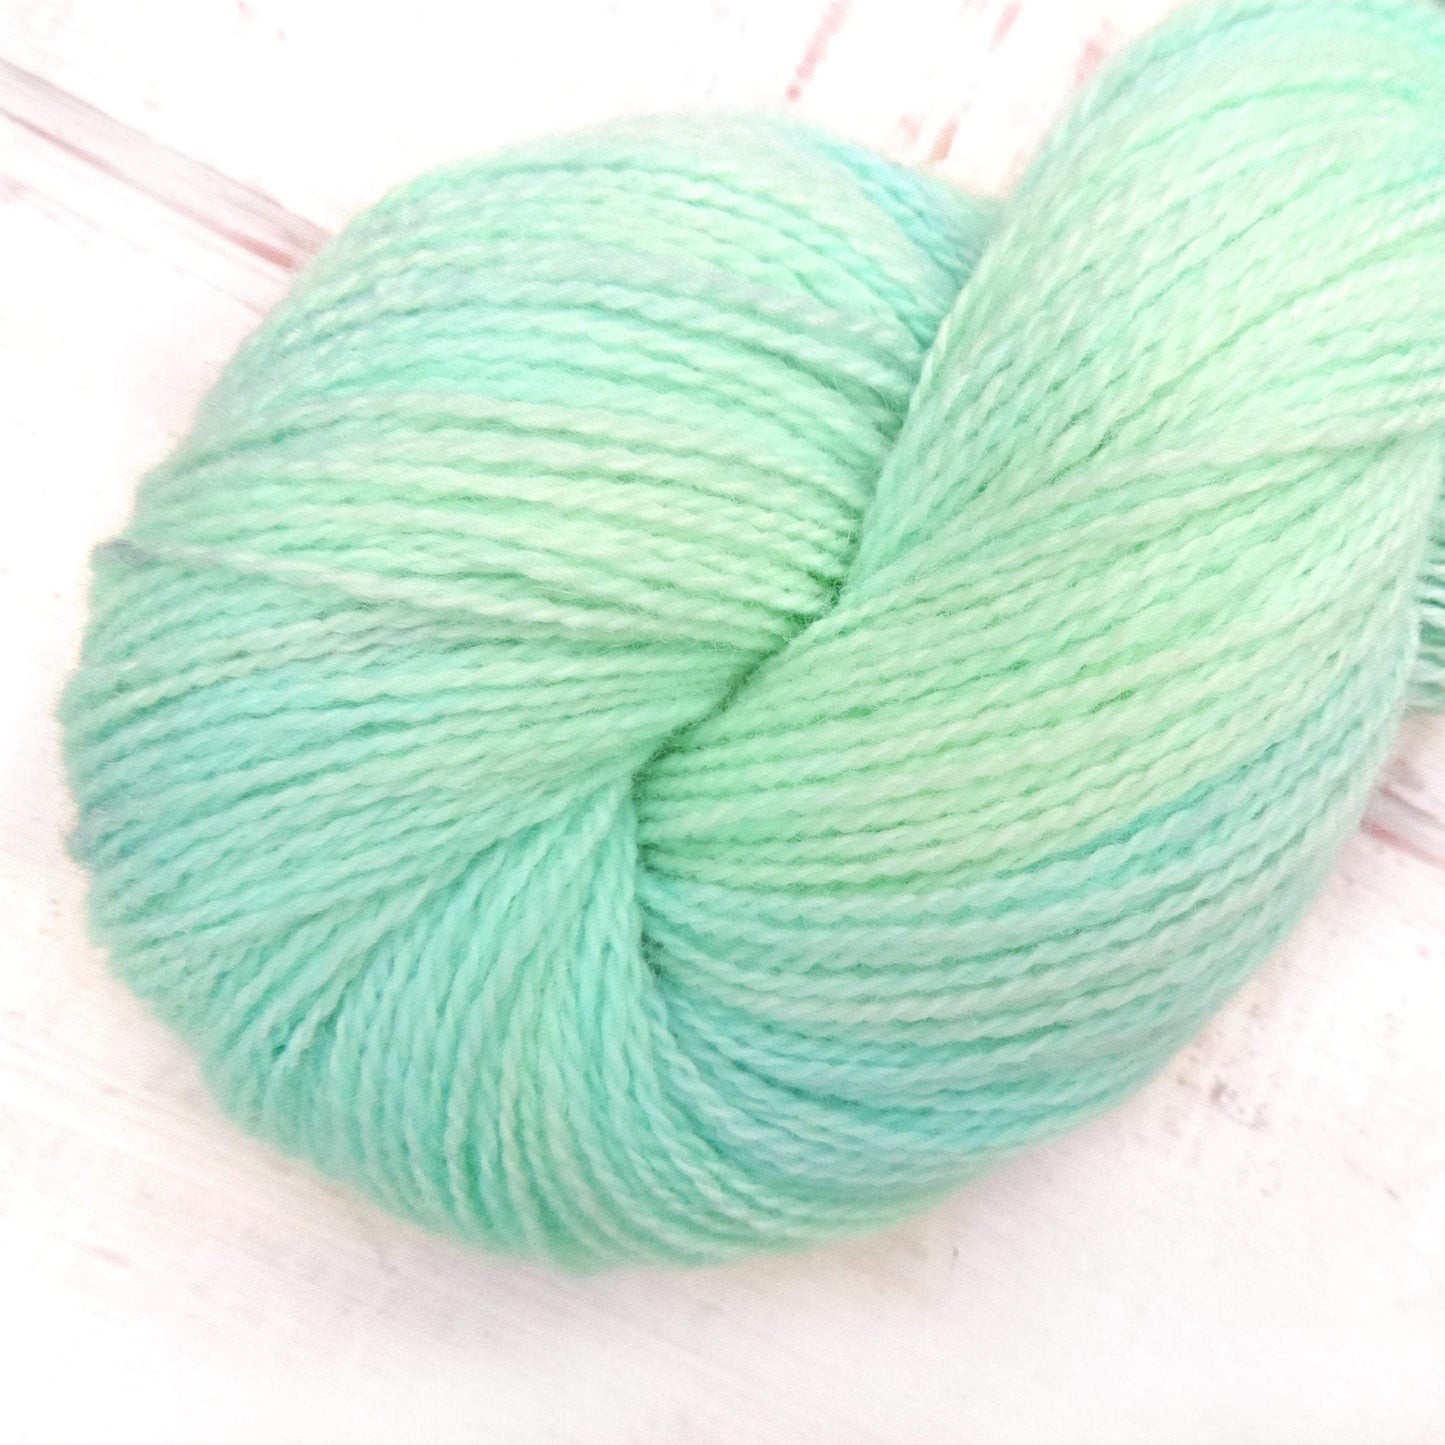 Iced mint - Trollfjord Sock - Hand Dyed Yarn - Tonal yarn